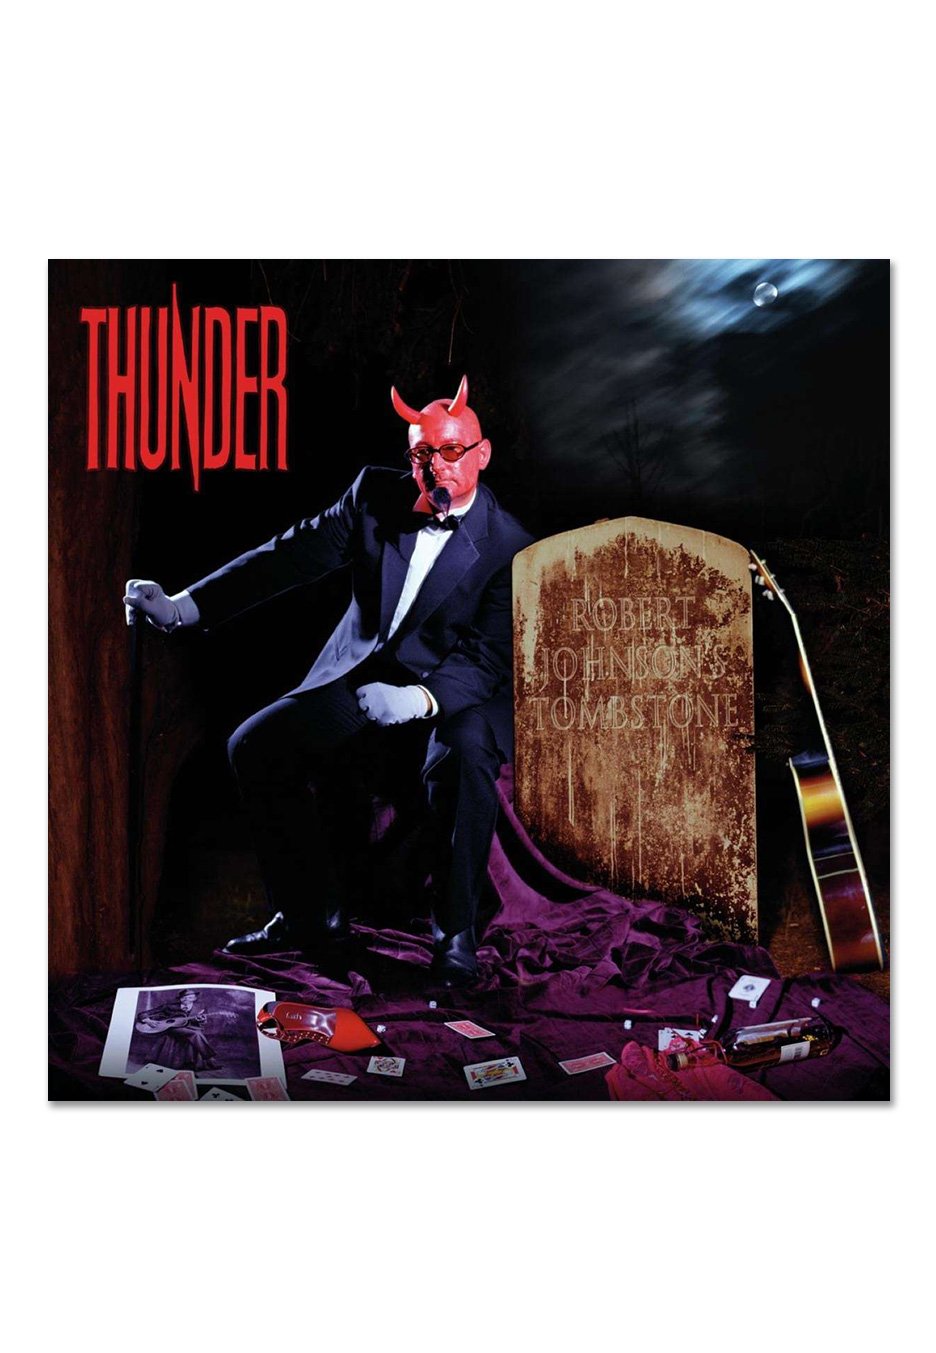 Thunder - Robert Johnson's Tombstone - CD